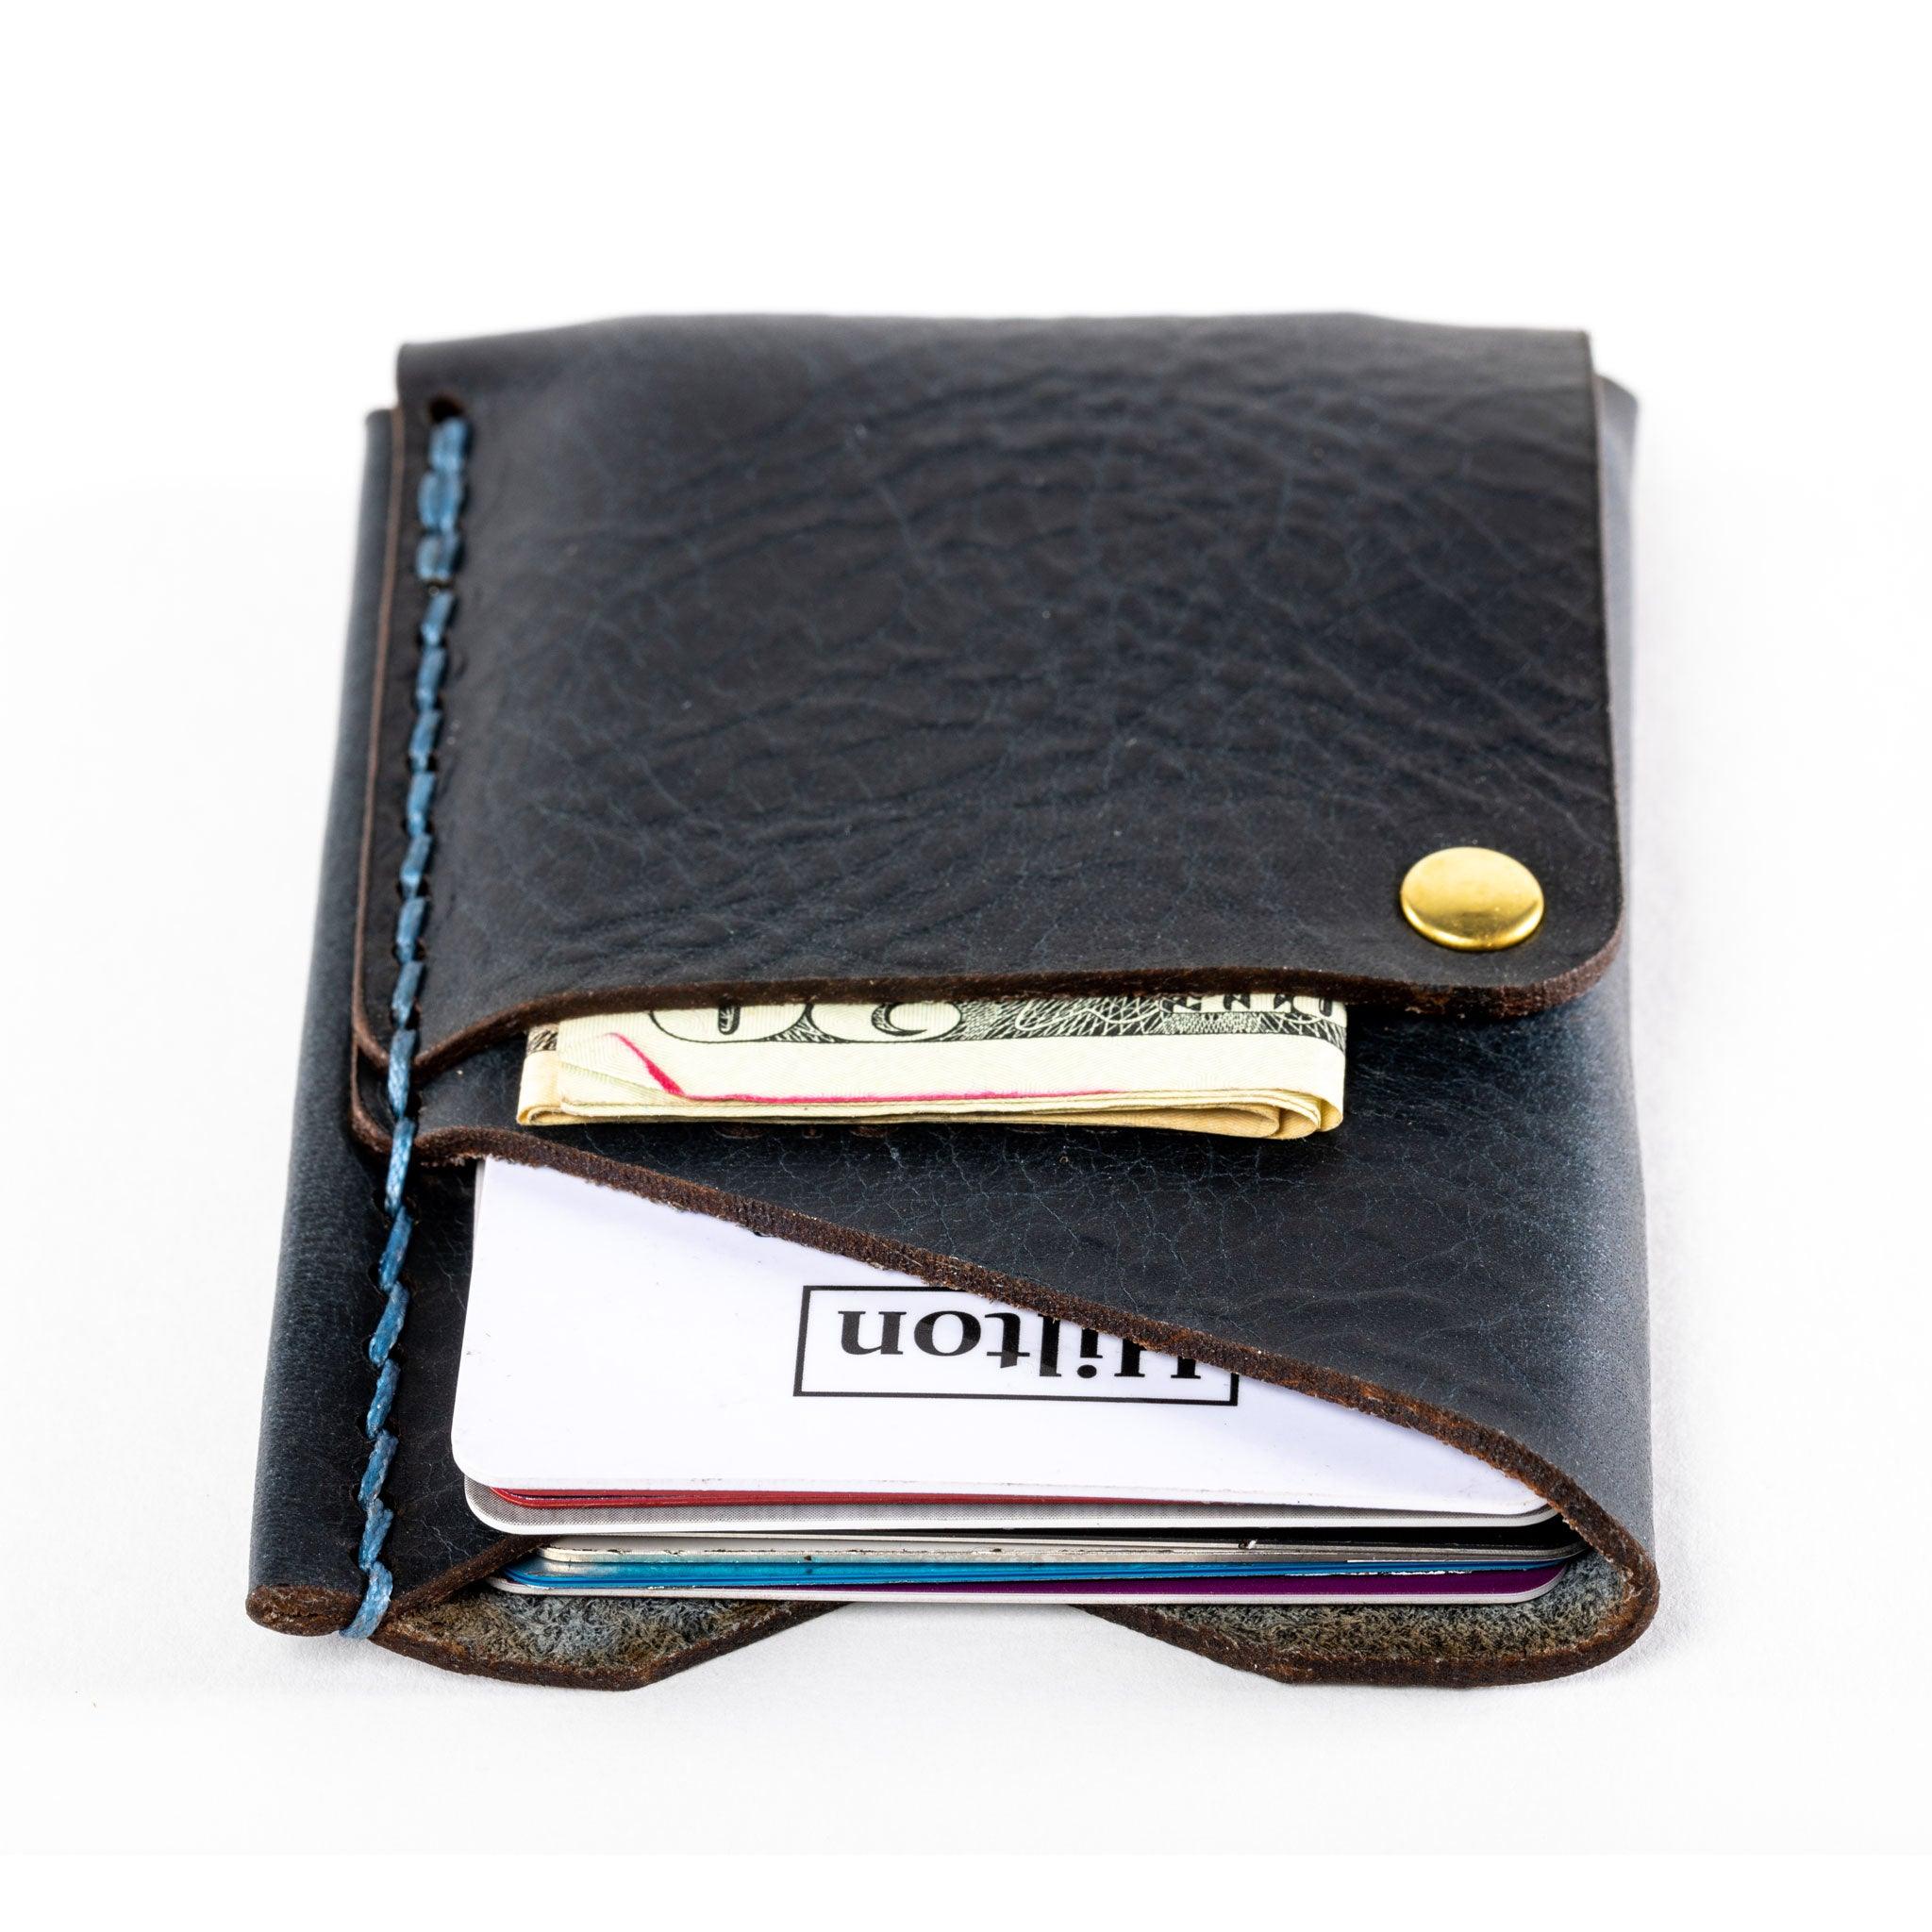 Big Spender Leather Wallet in Midnight - Espacio Handmade